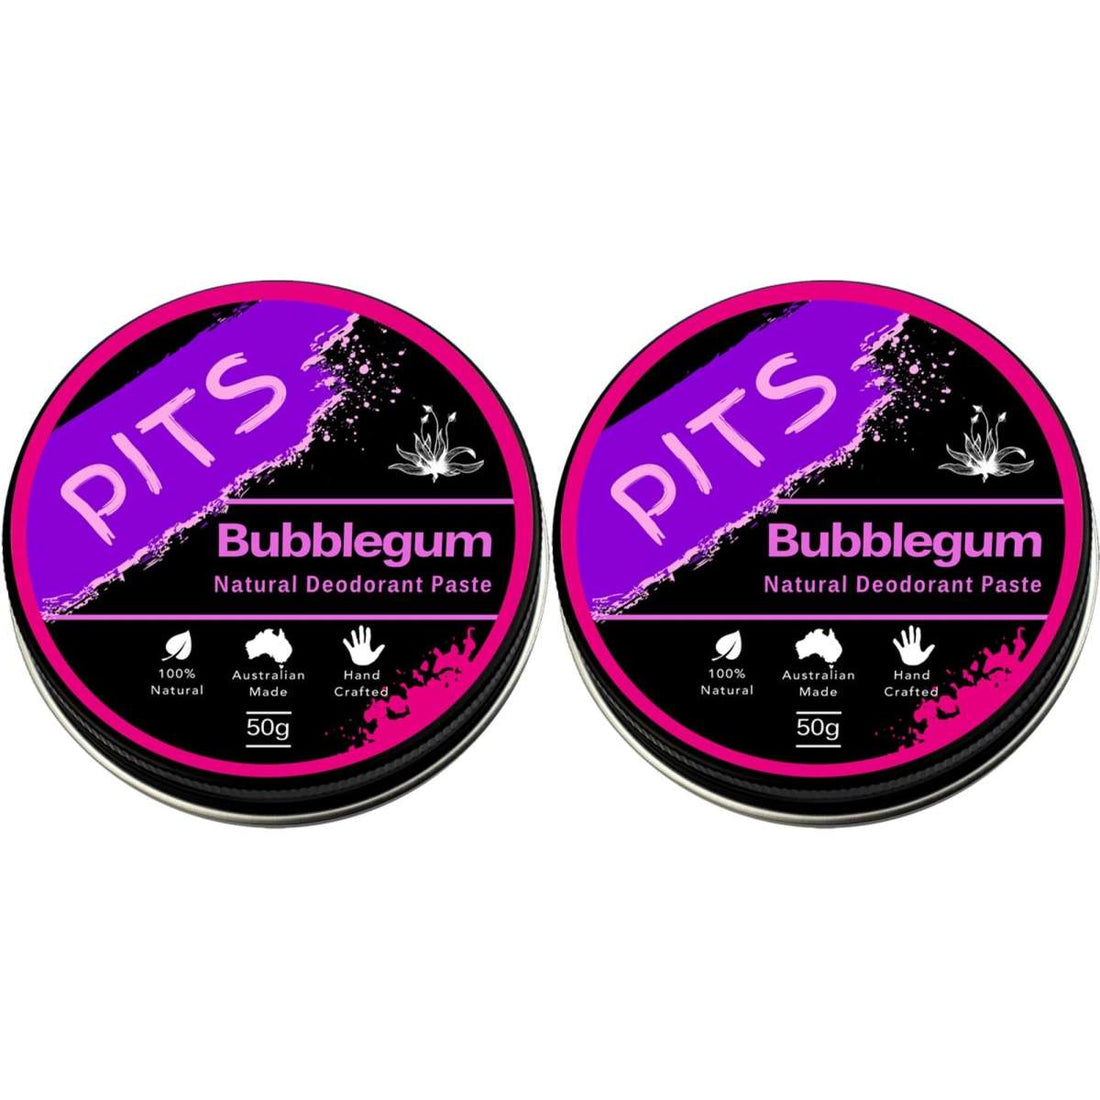 Aunty Amy's Natural Remedies Bubblegum Deodorant Paste 2 Pack 50g